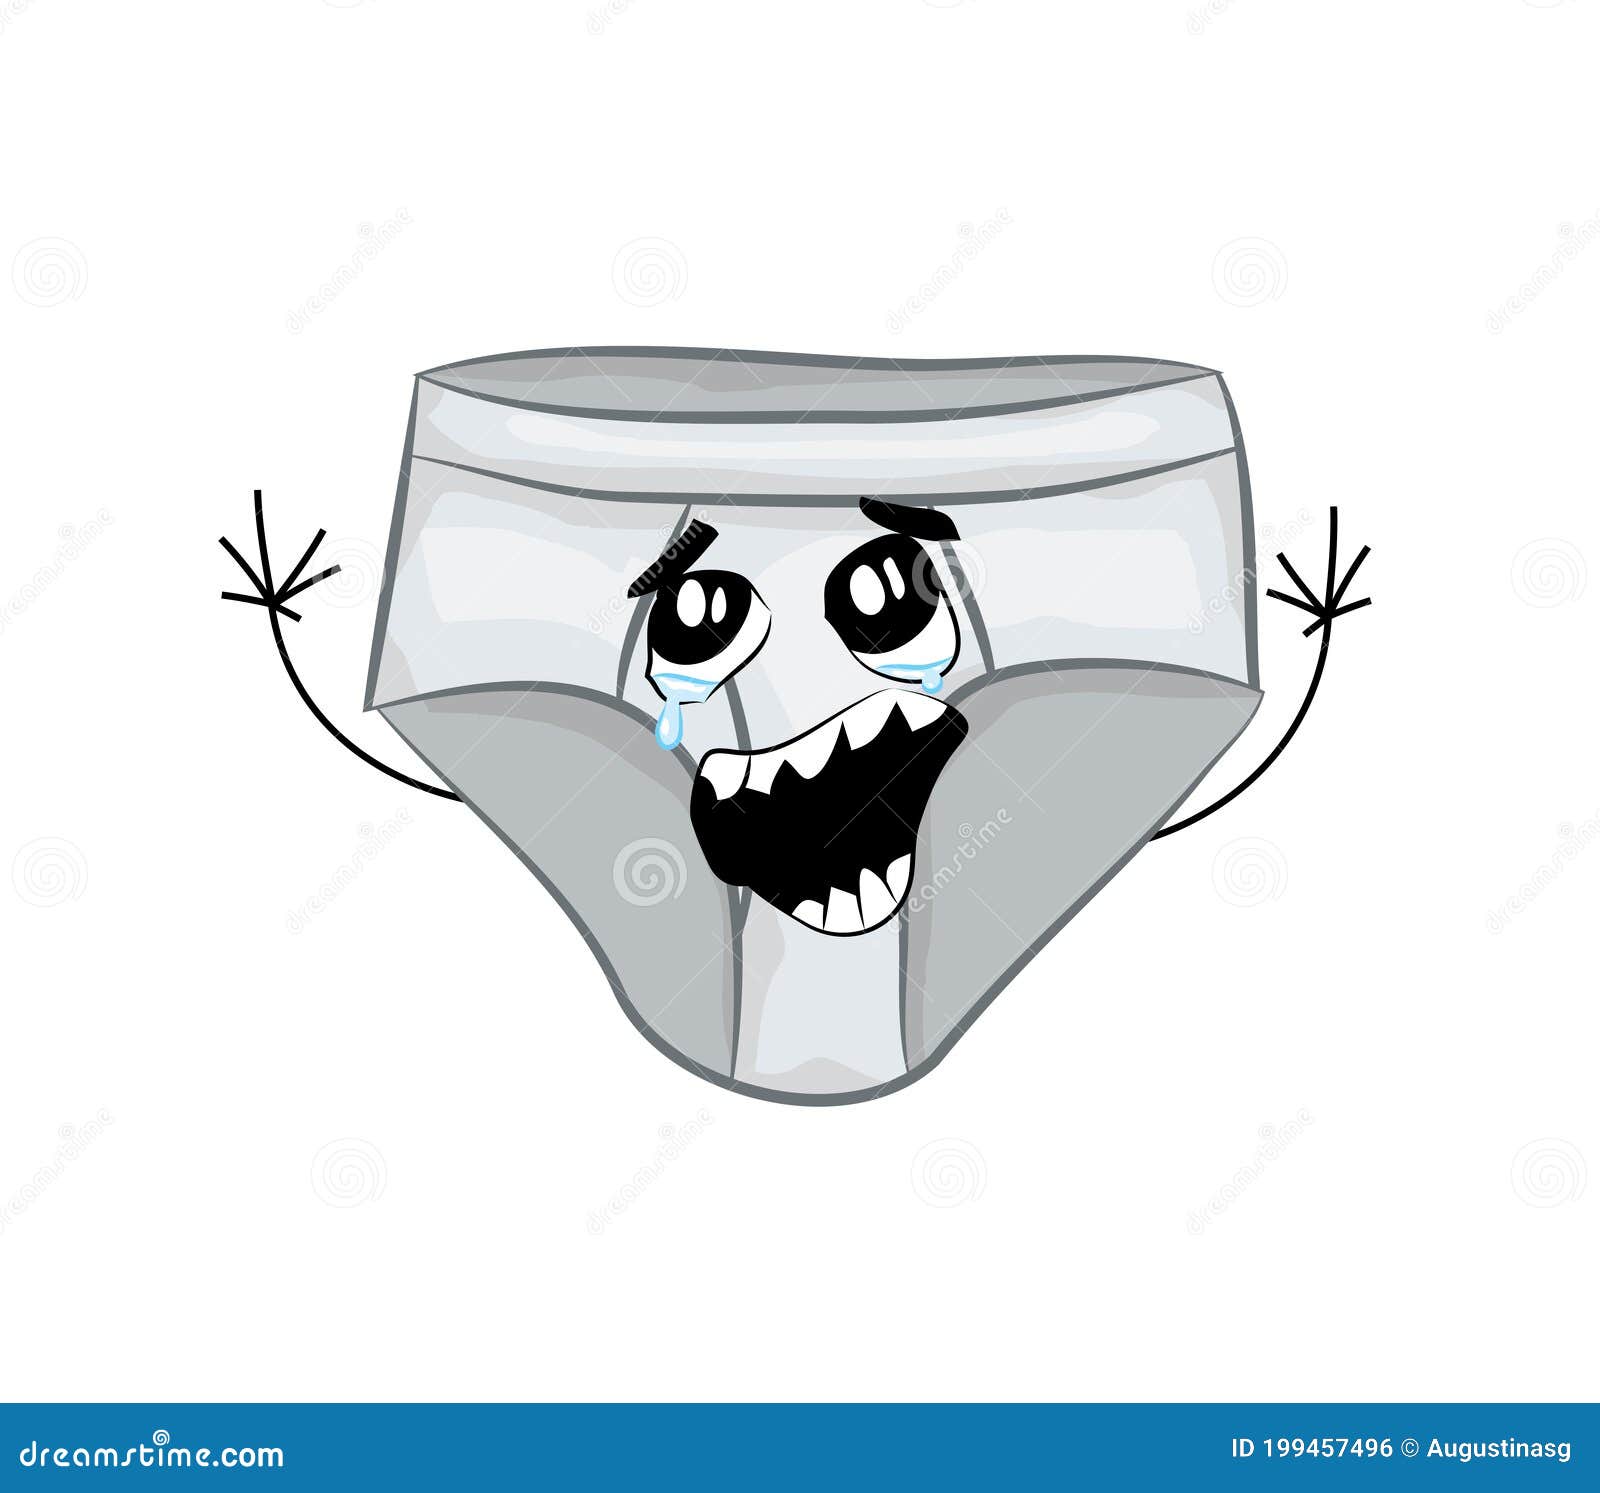 Crying Internet Meme Illustration of Men Underwear Boxers Stock